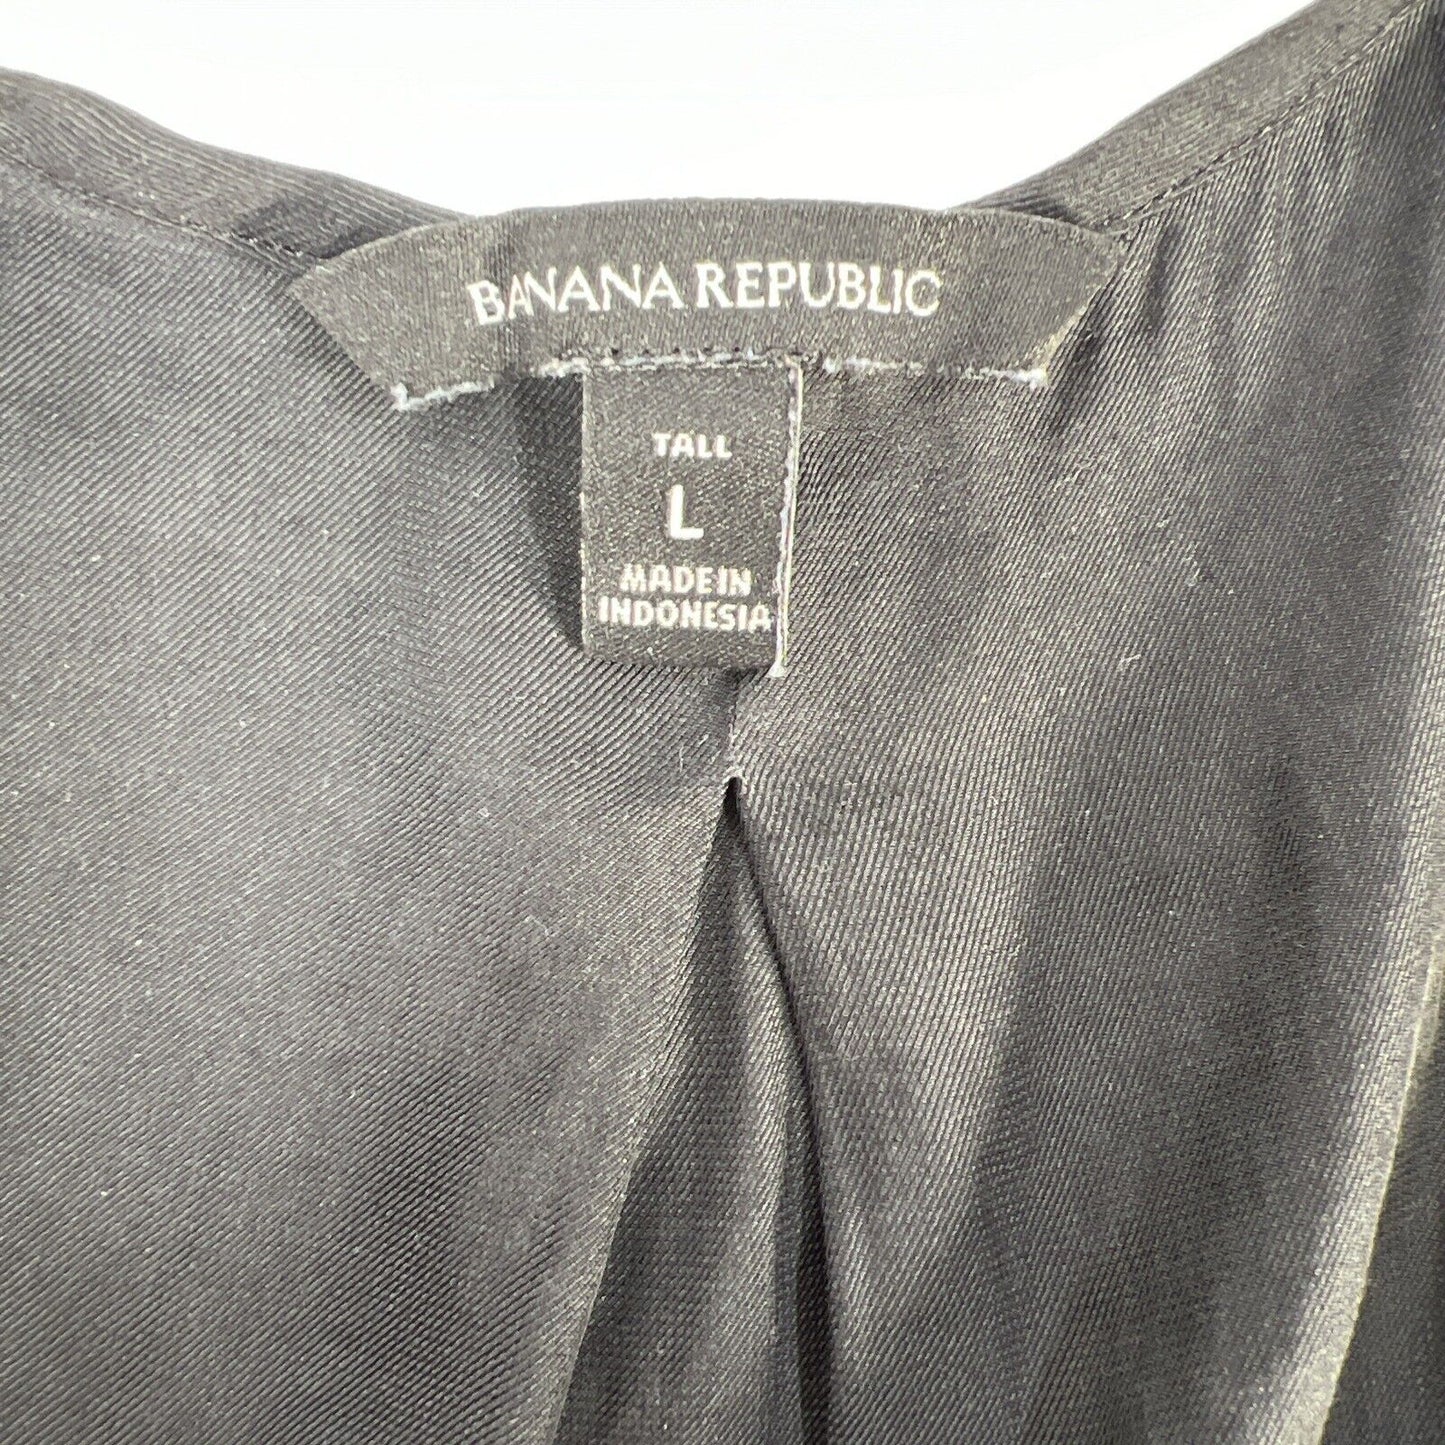 Banana Republic Women's Black Sleeveless V-Neck Top - Tall L